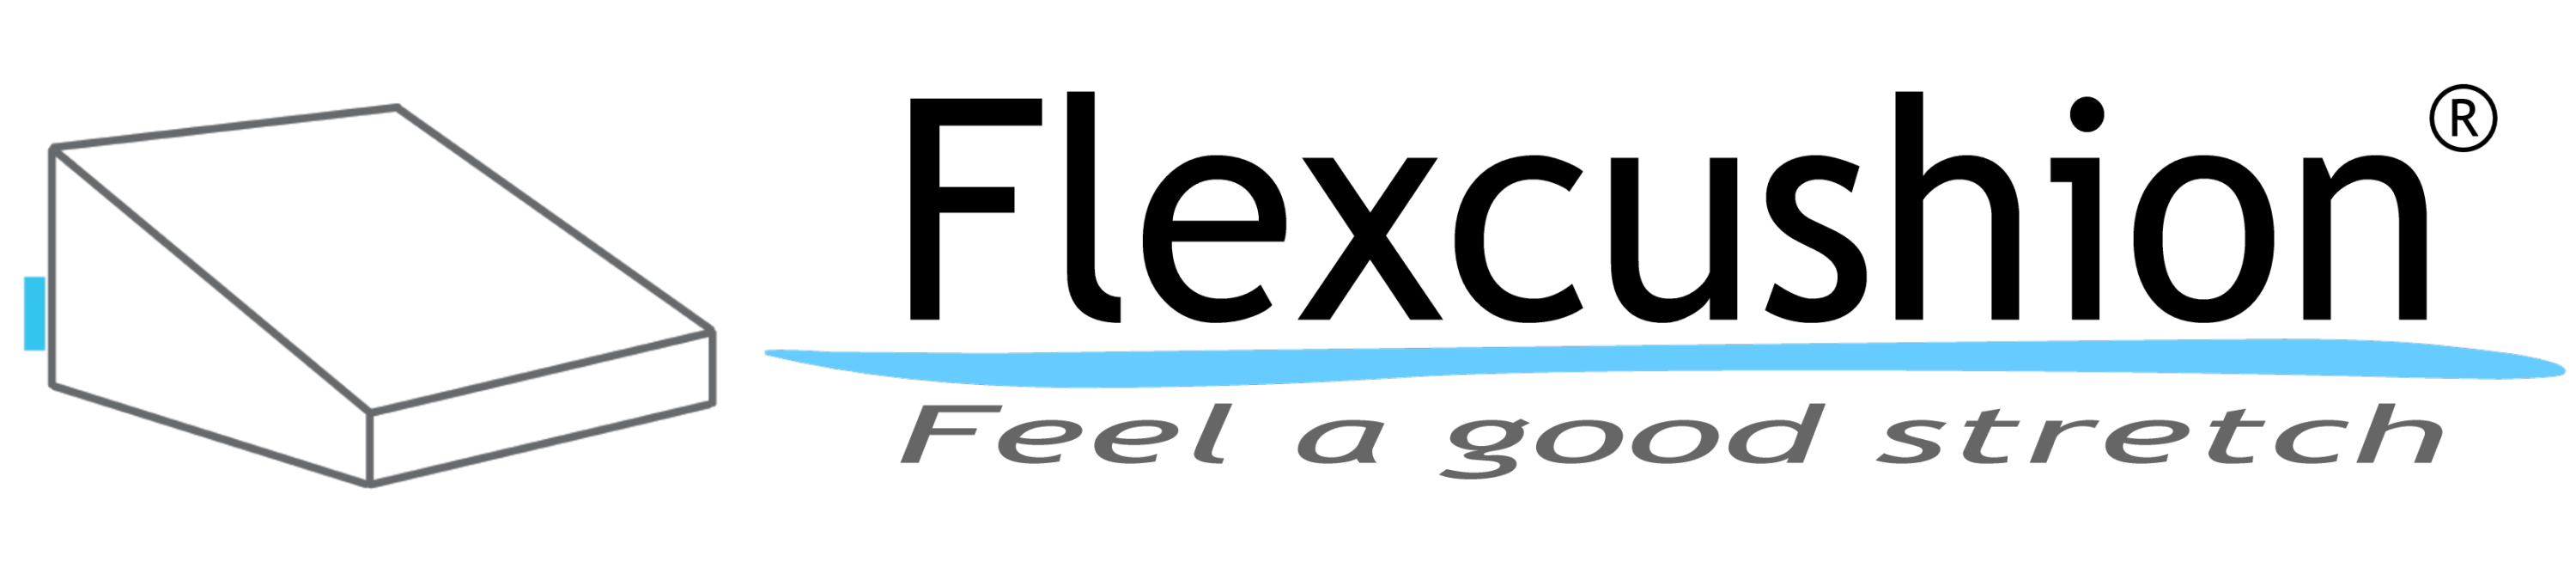 Flexcushion logo for inner idea